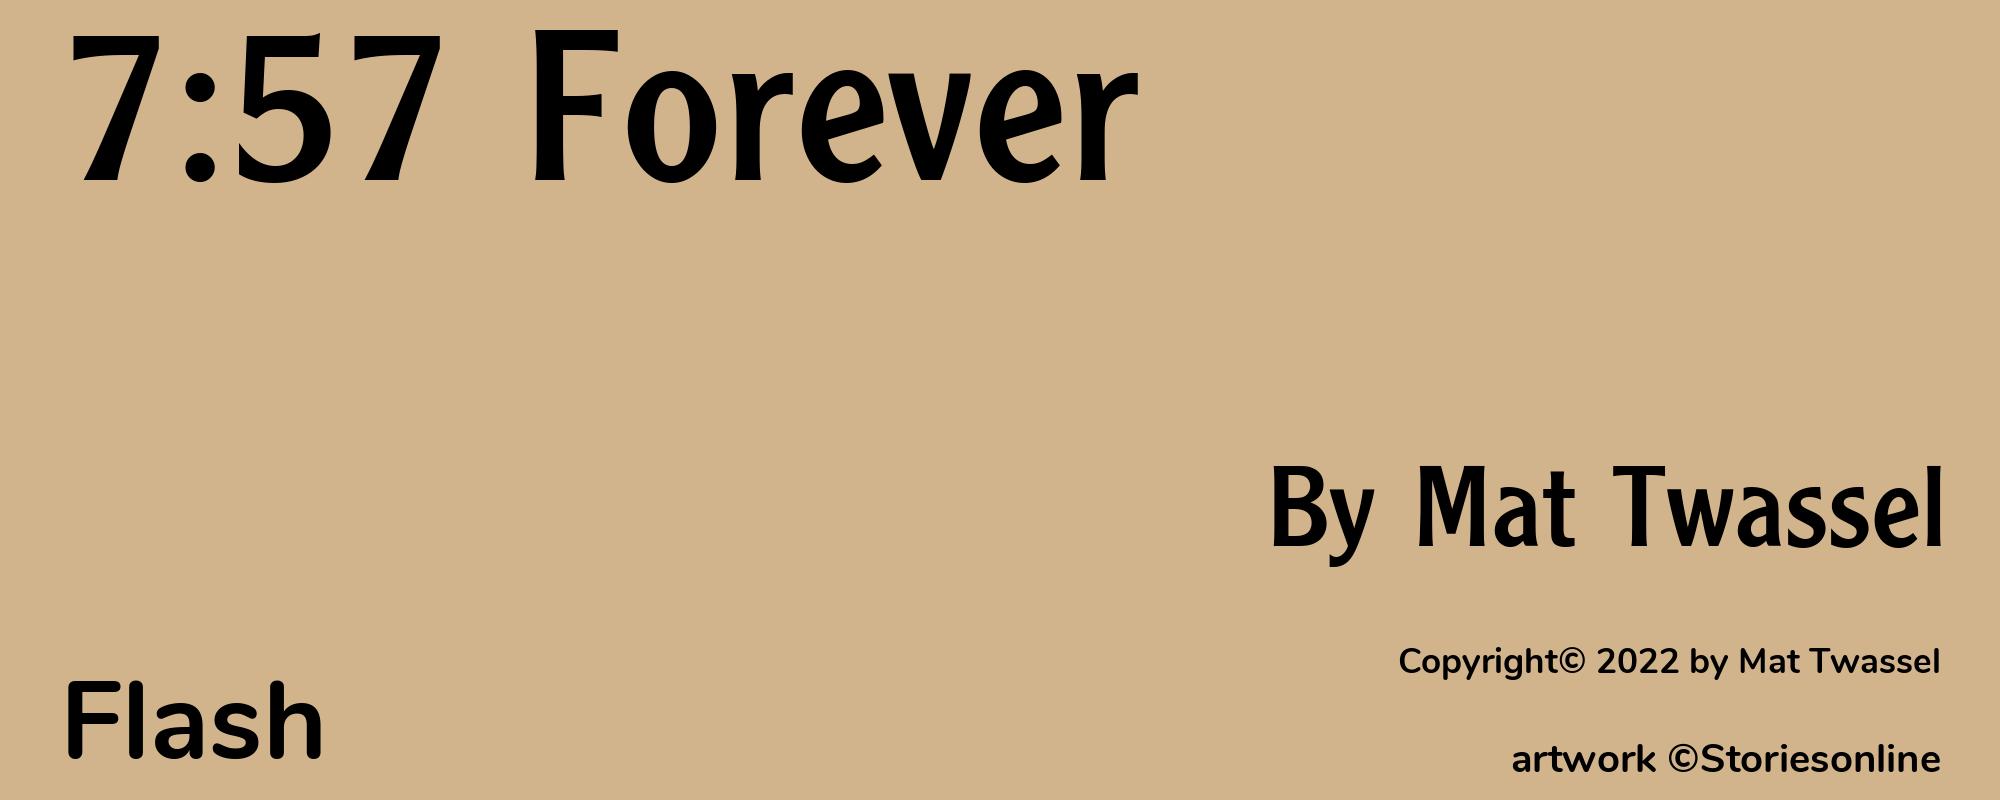 7:57 Forever - Cover